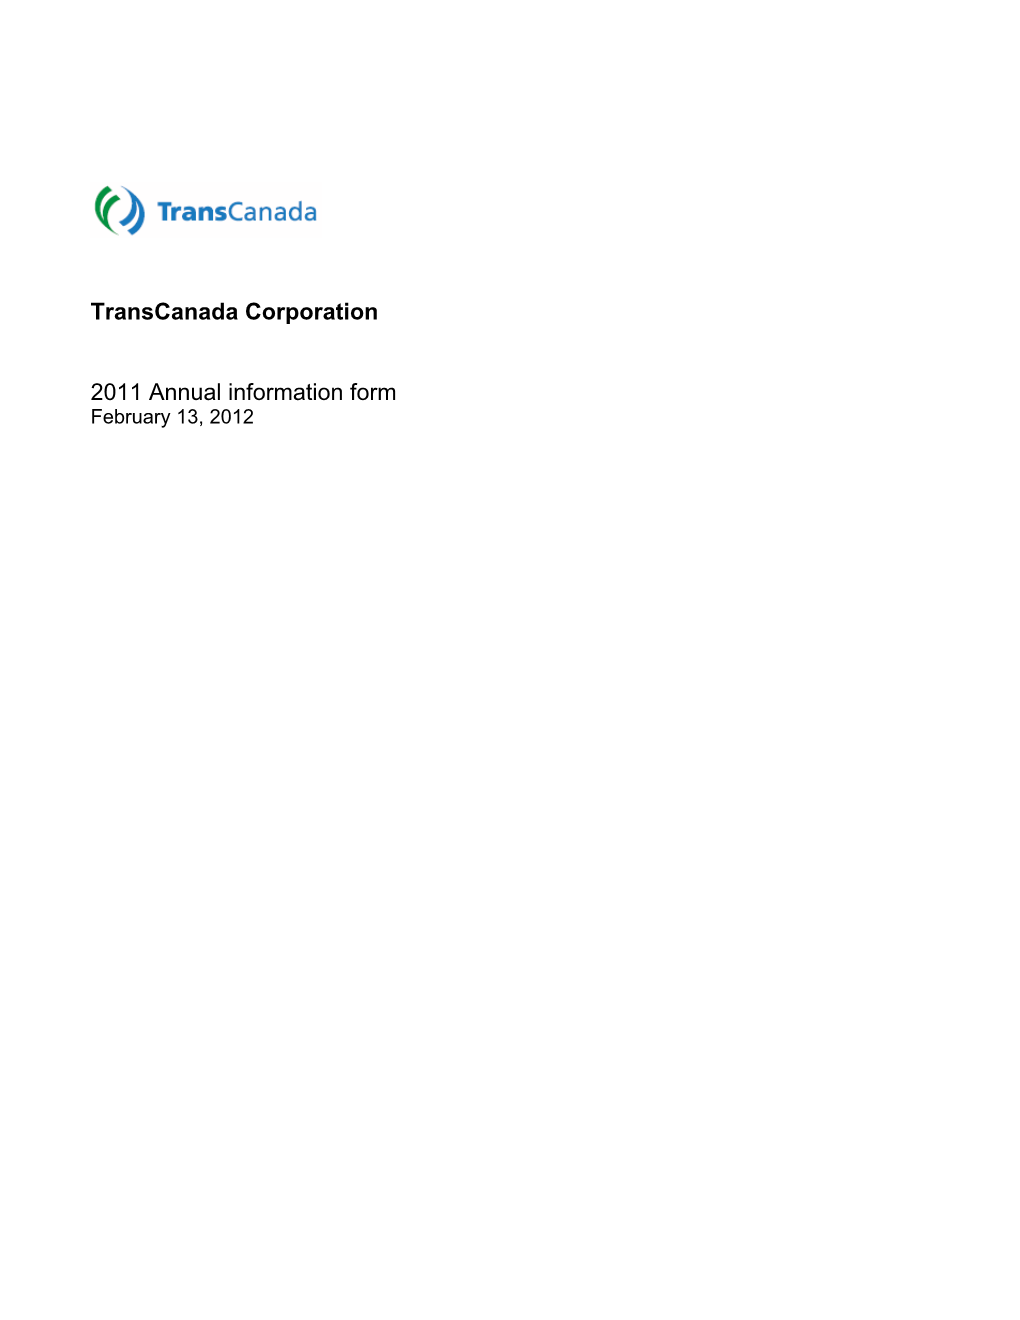 Transcanada Corporation 2011 Annual Information Form